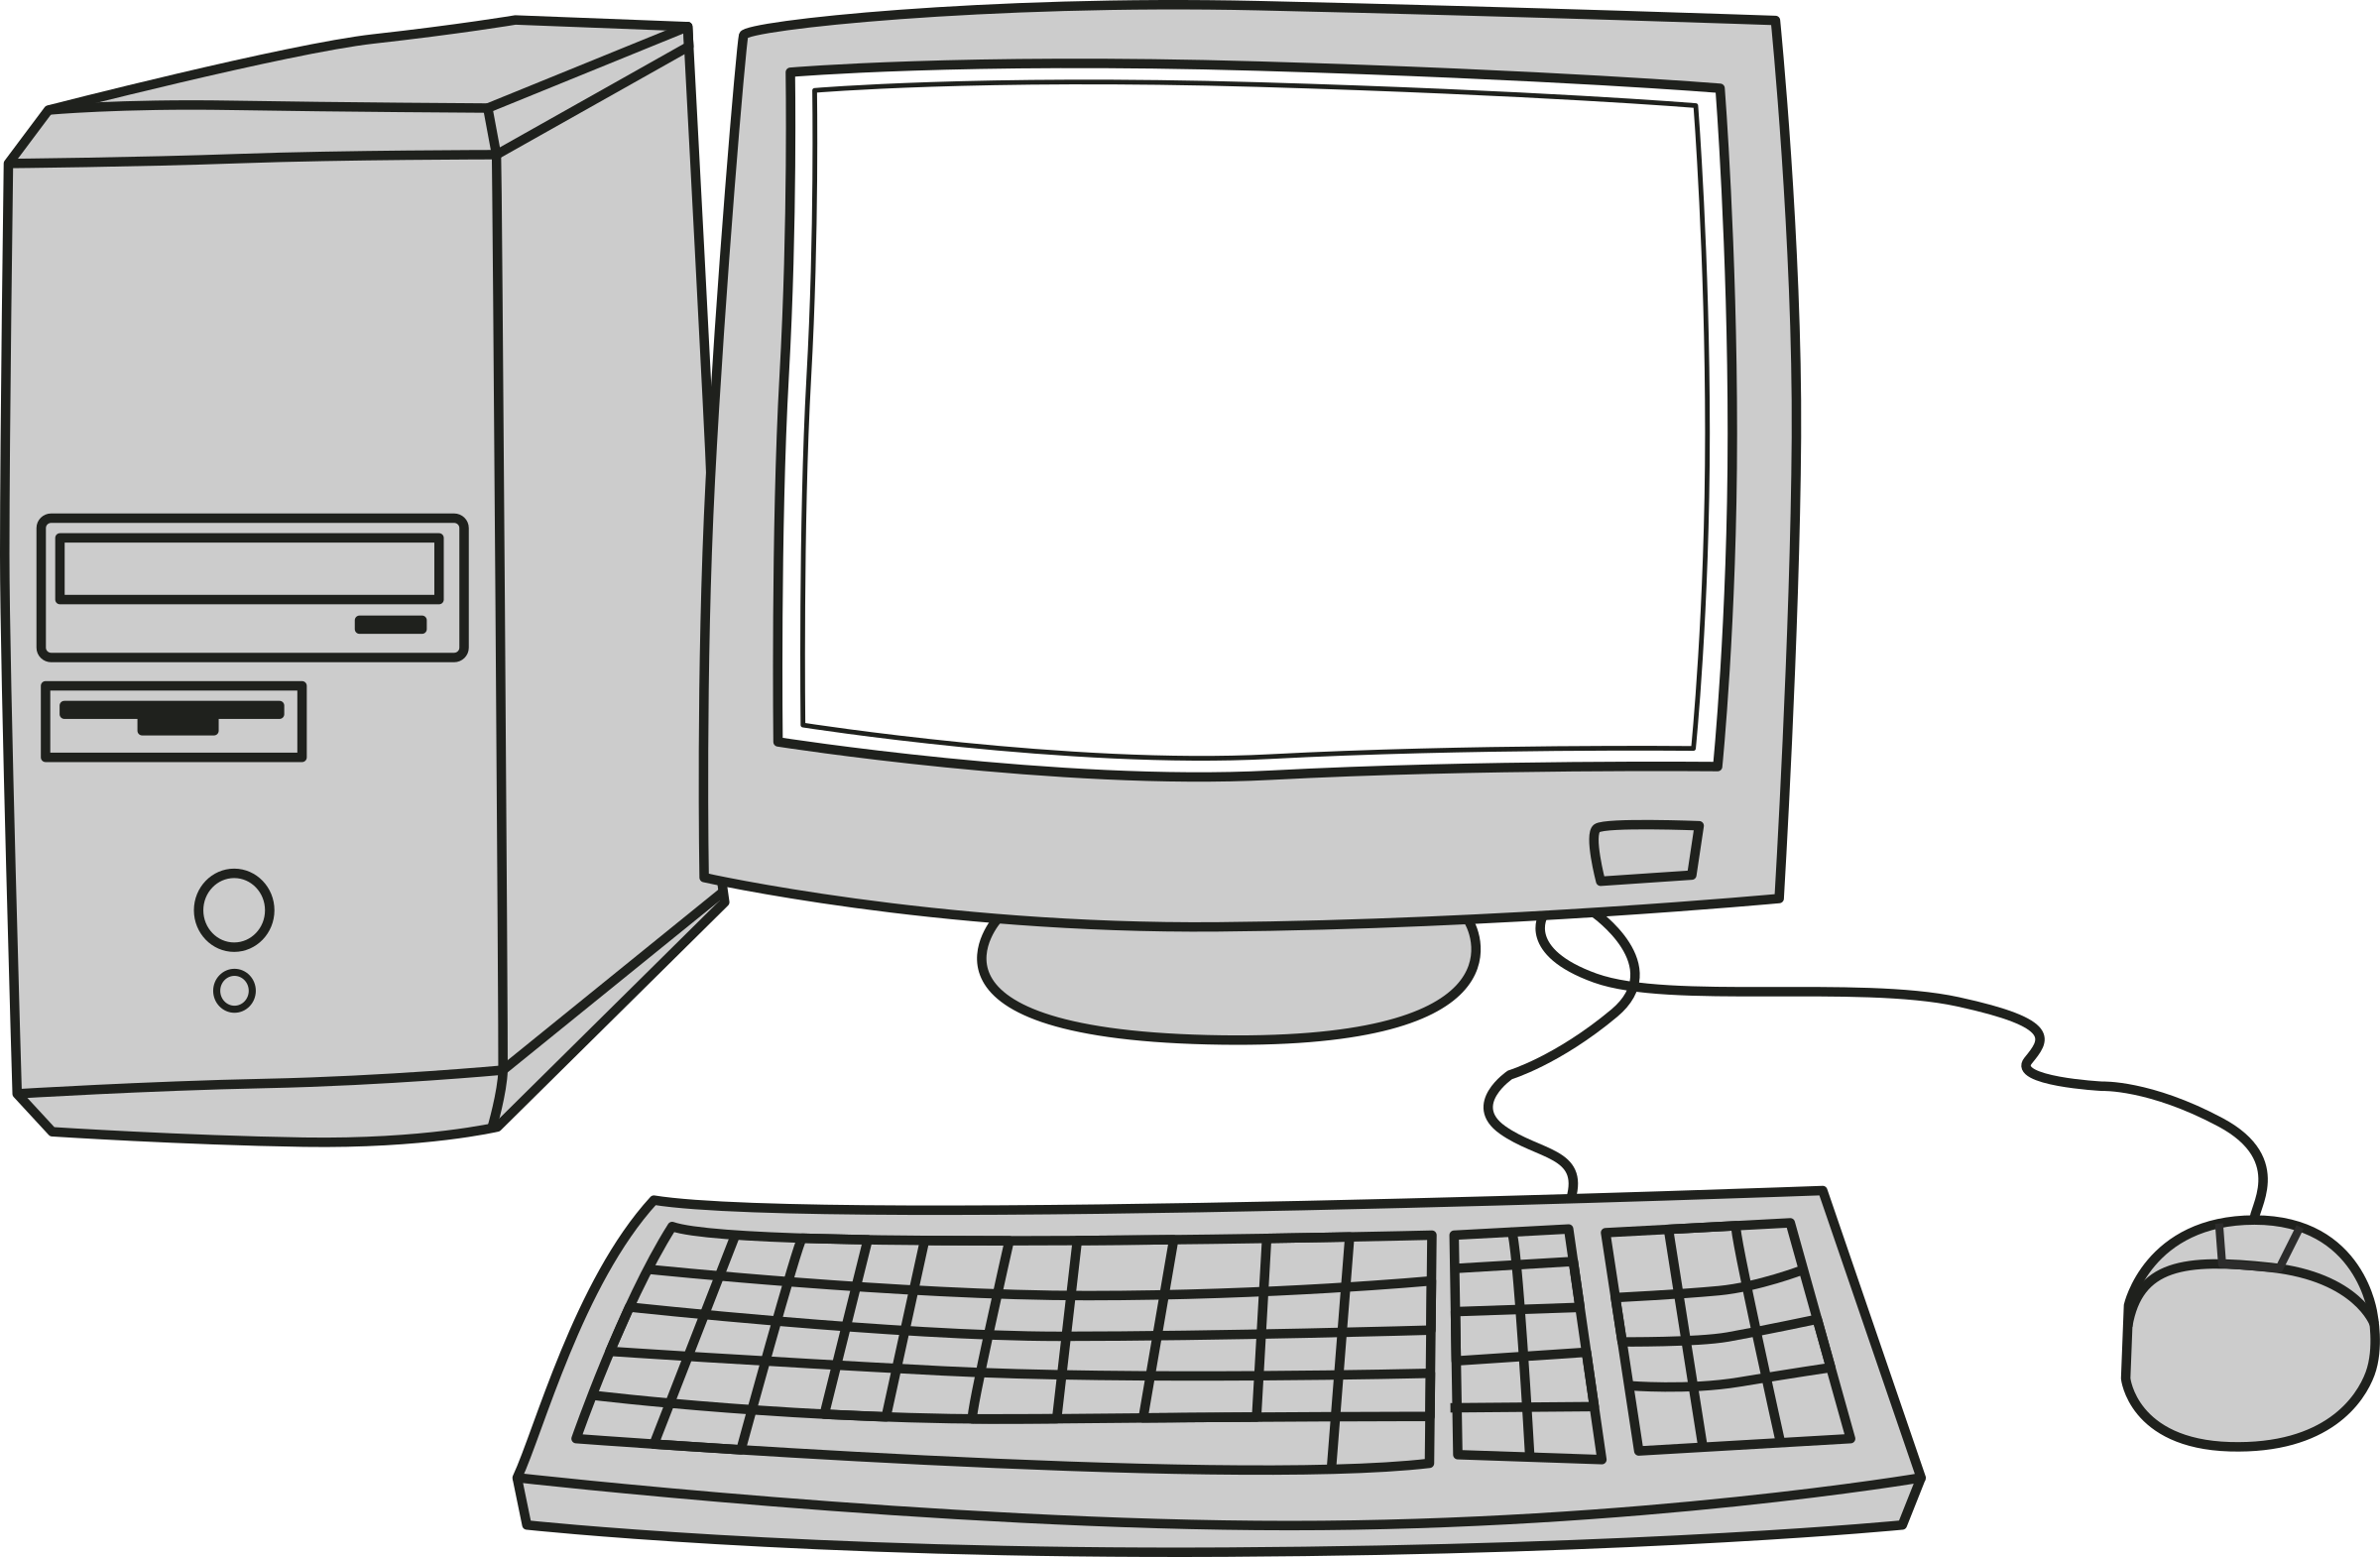 Pc pictures. Компьютер рисунок. Компьютер мультяшный. Раскраска компьютер. Нарисовать компьютер.